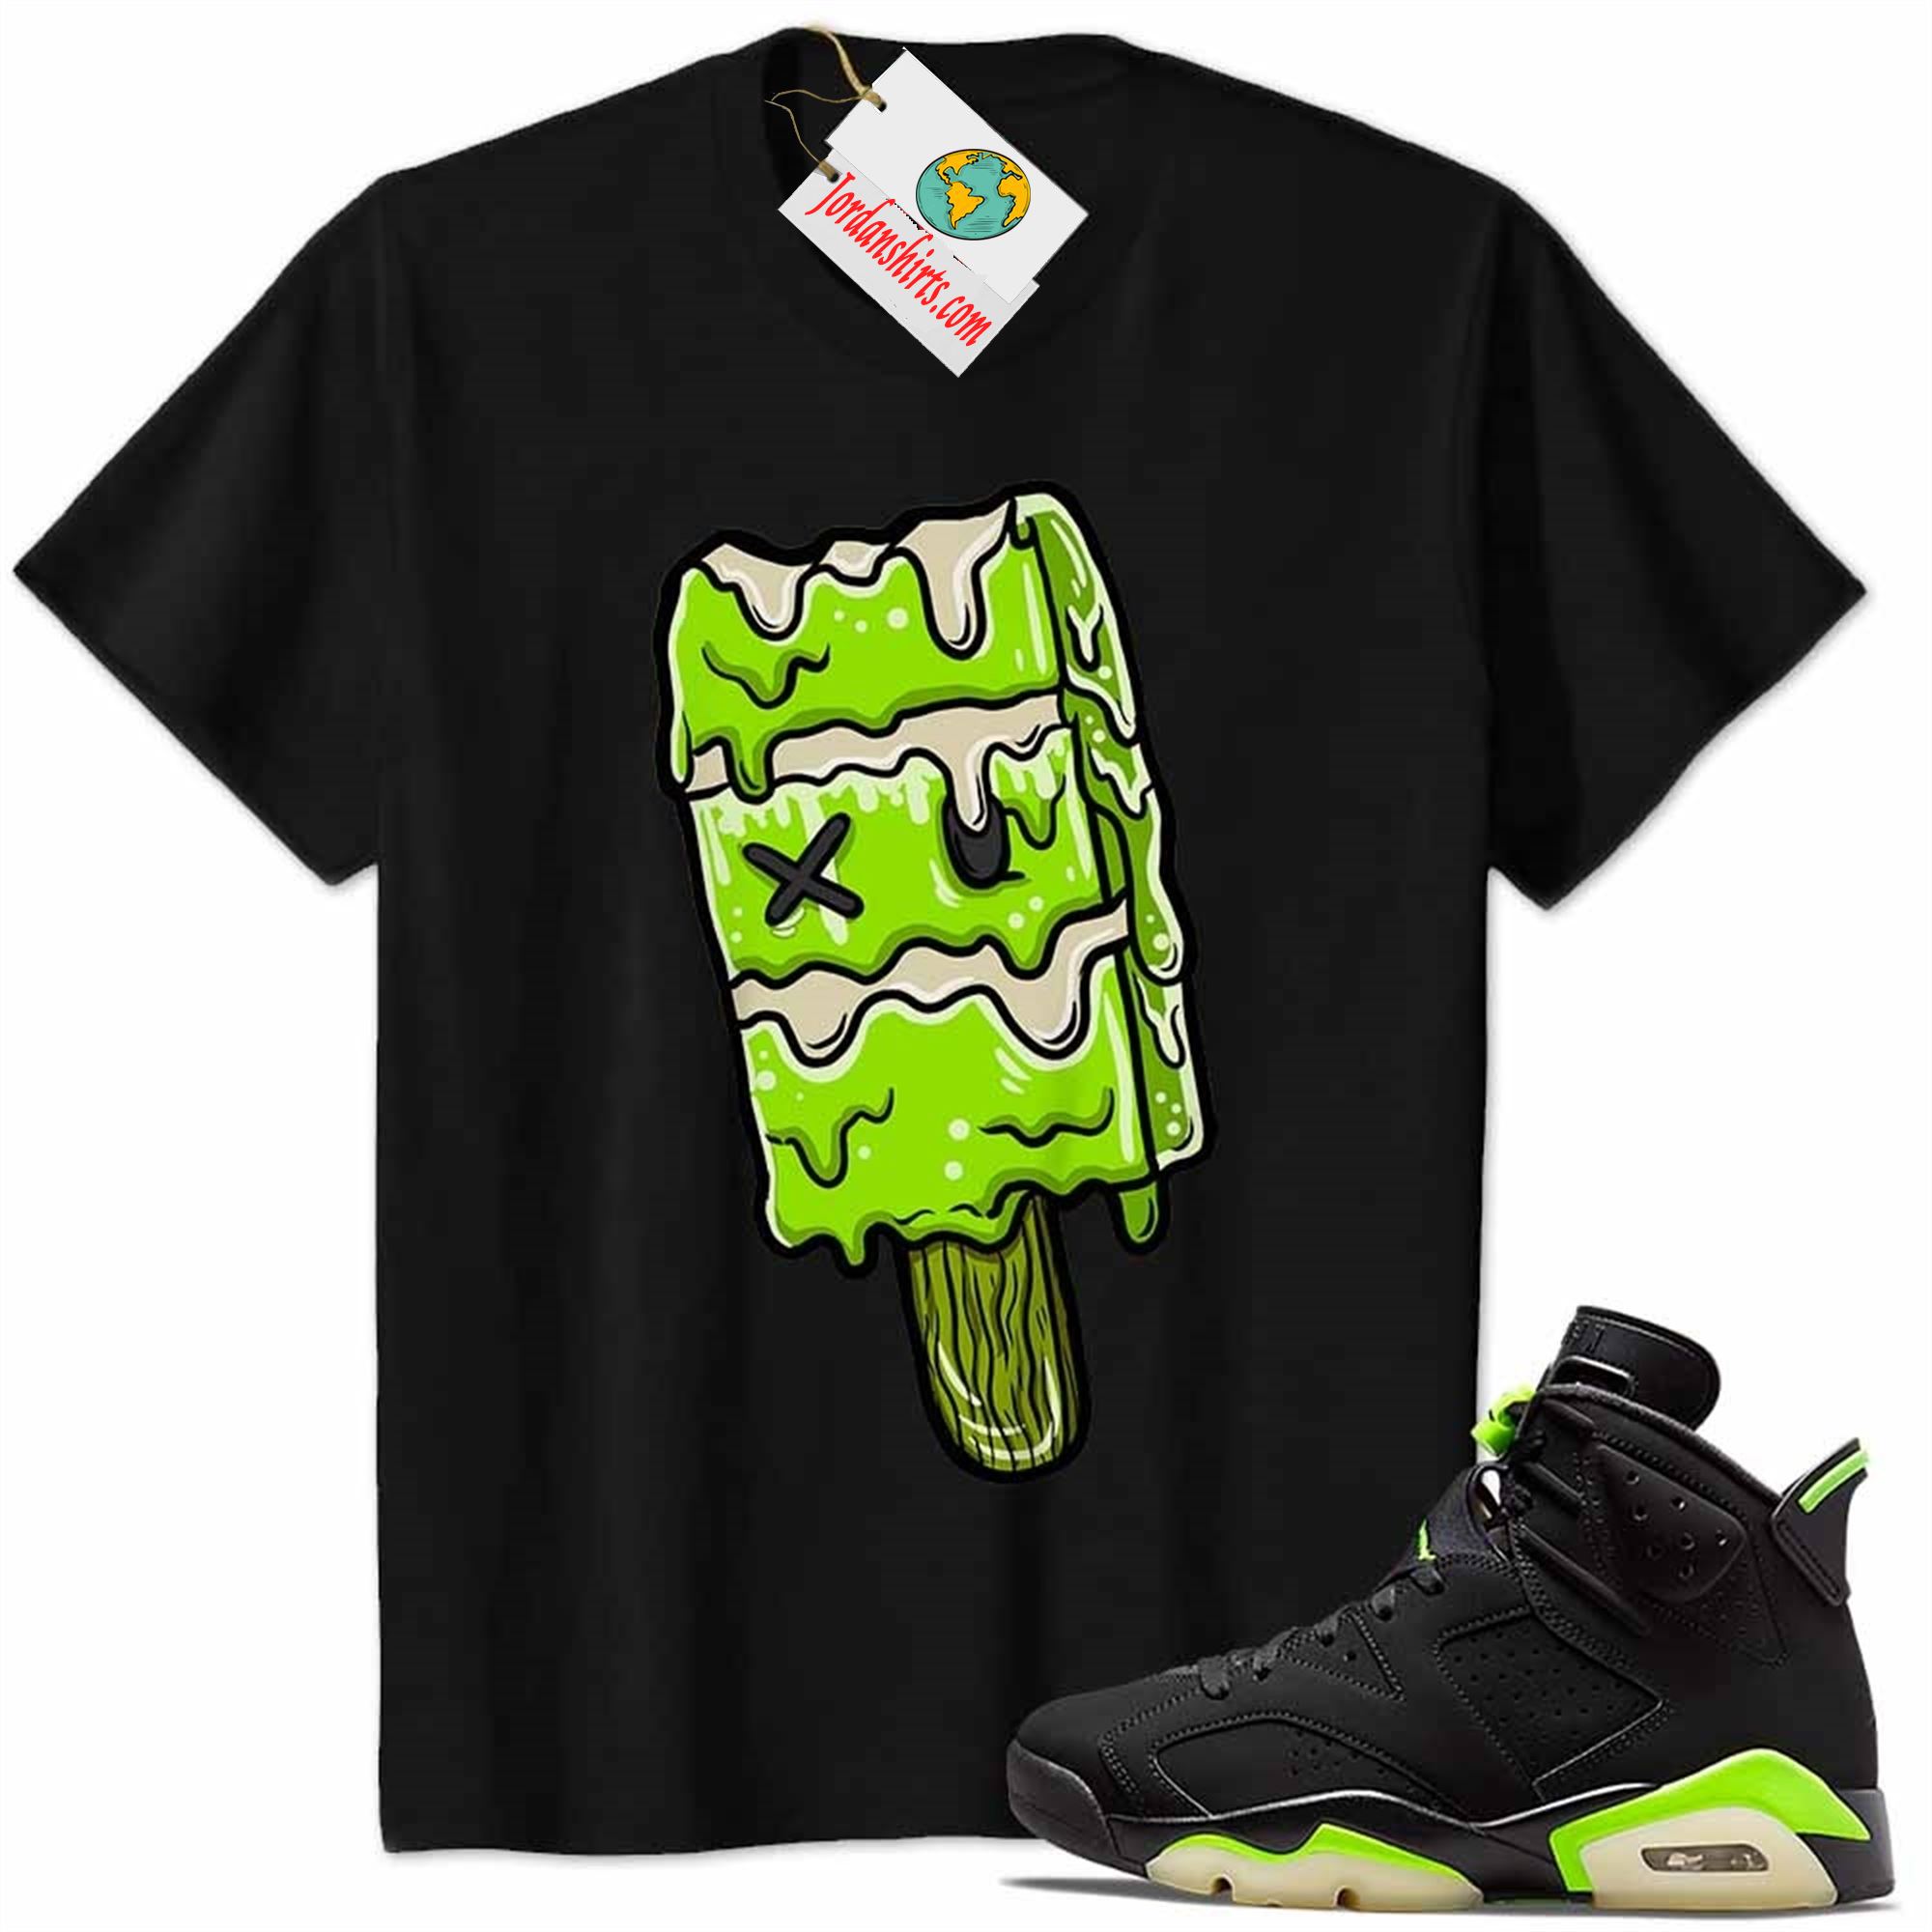 Jordan 6 Shirt, Ice Cream Dripping Black Air Jordan 6 Electric Green 6s Size Up To 5xl